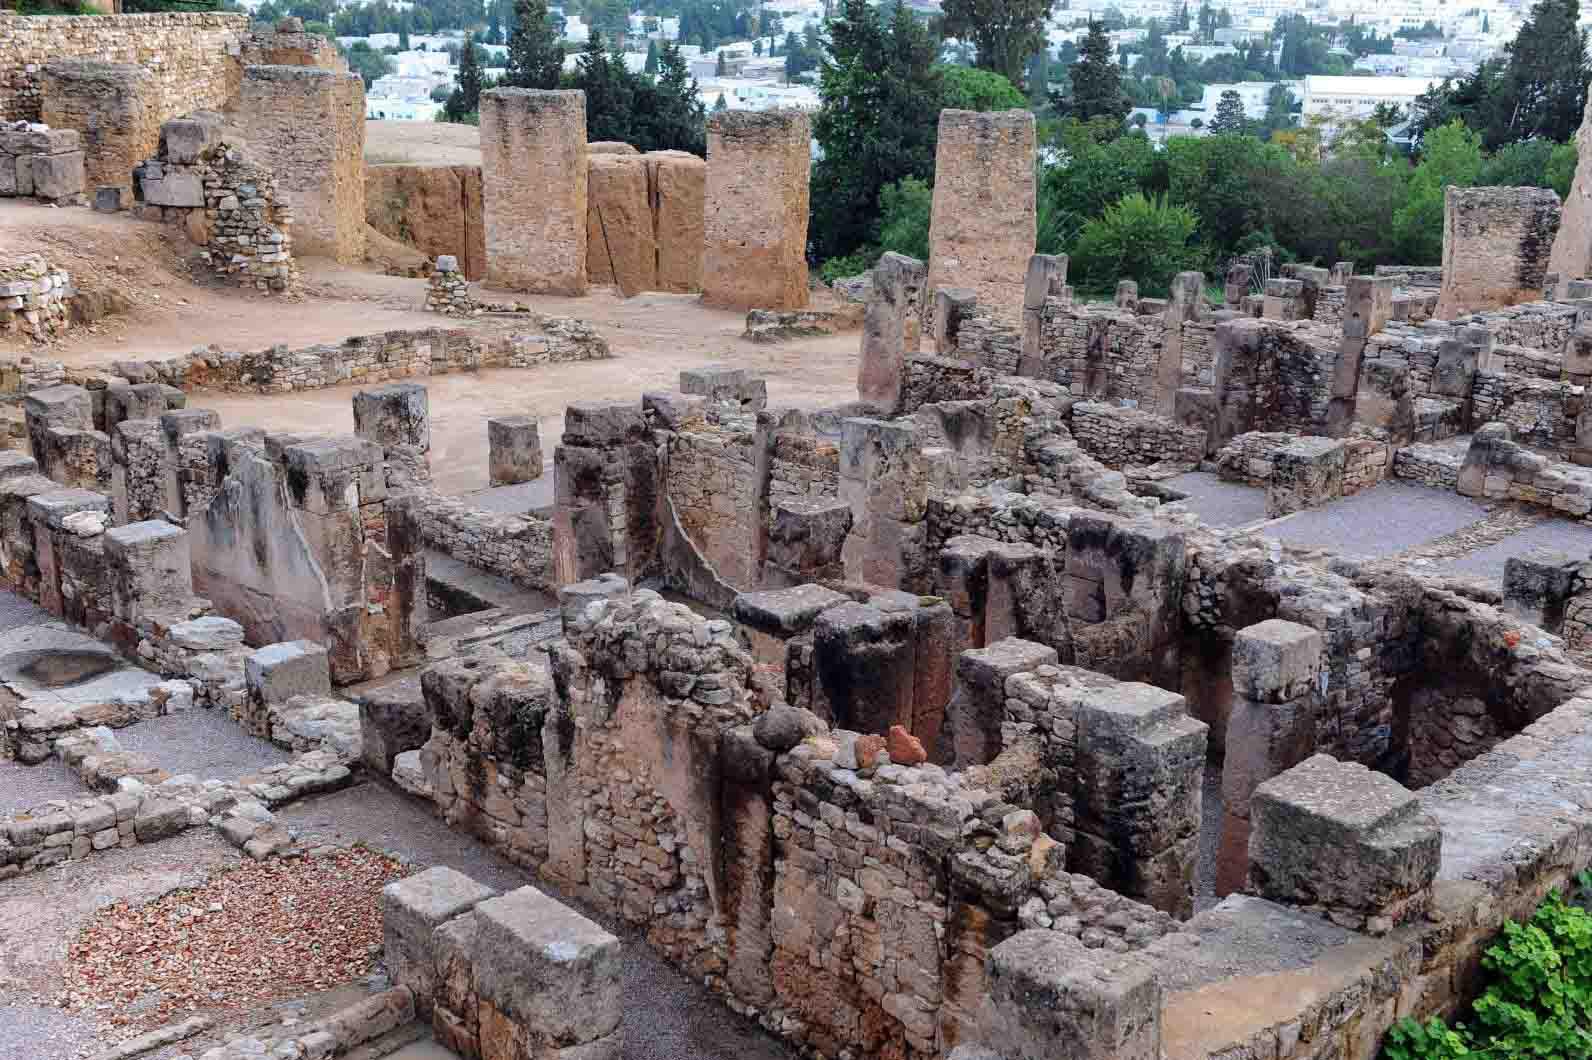 The Carthage Museum in Tunisia